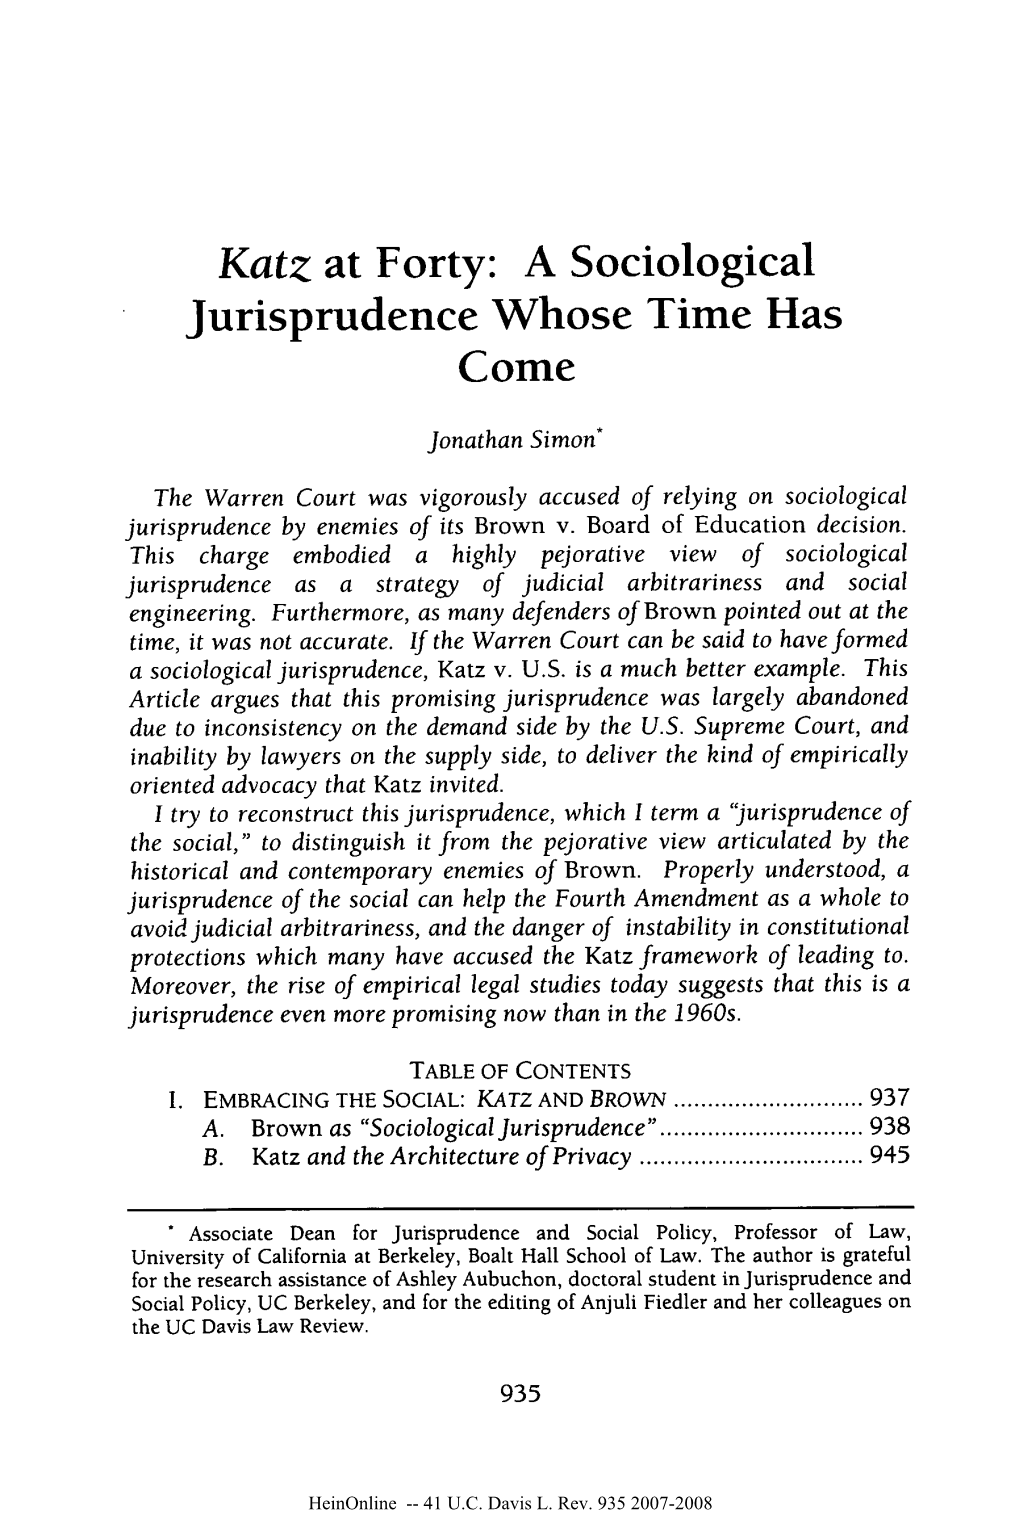 A Sociological Jurisprudence Whose Time Has Come